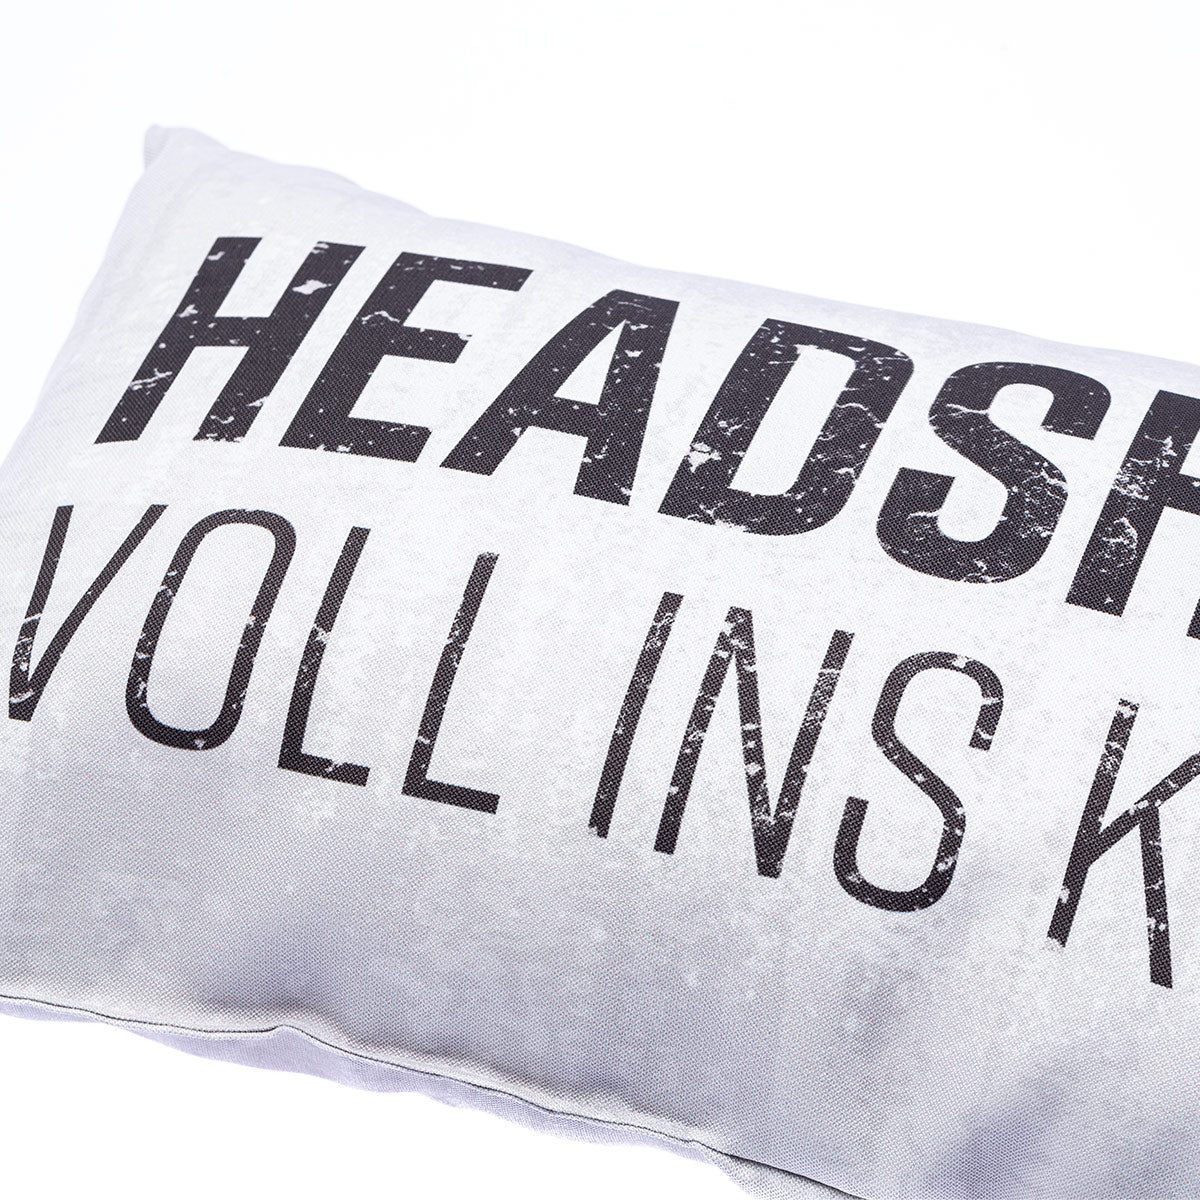 Gaming pillow "Headshot" gray 